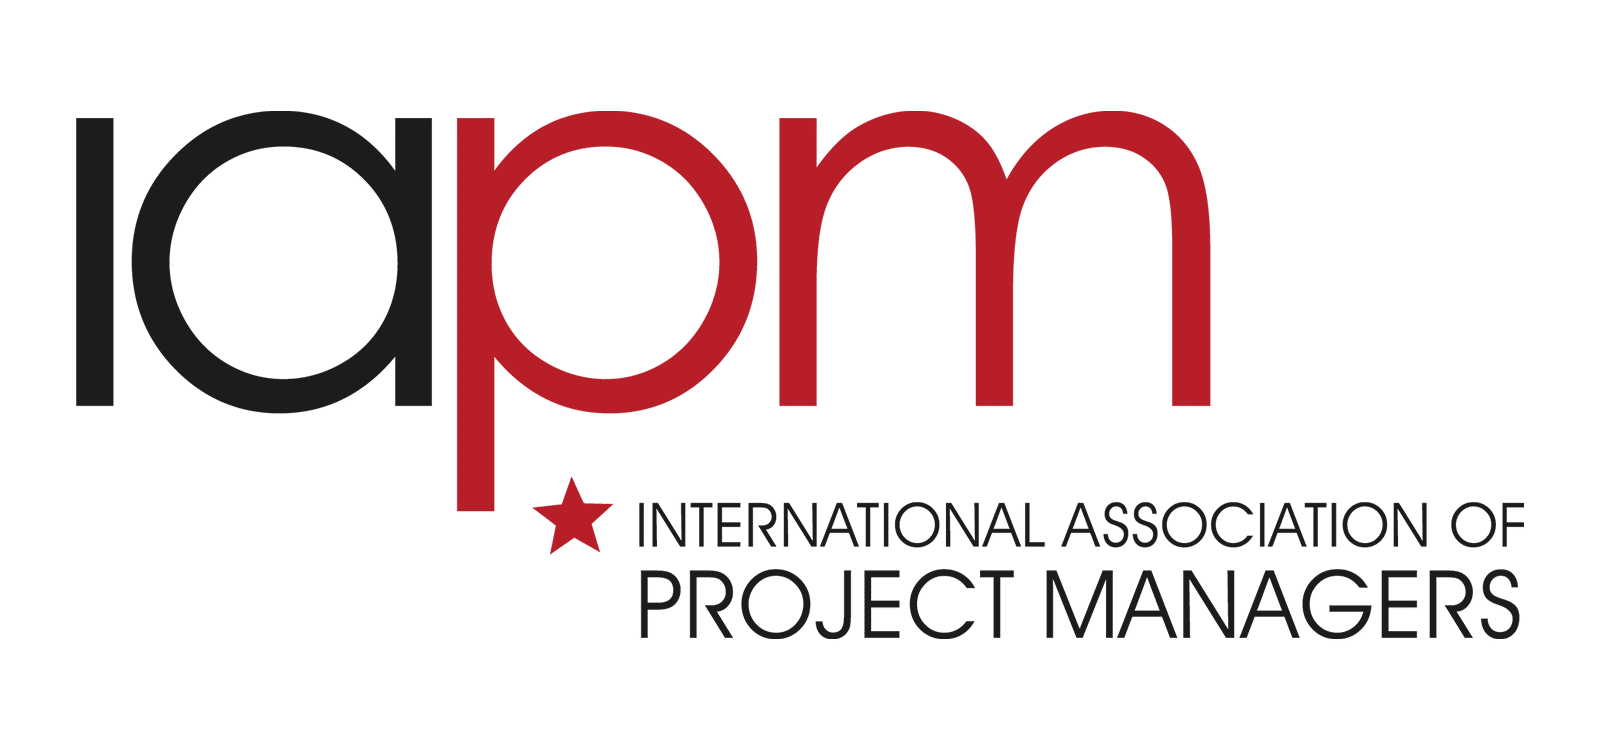 International Association of Project Managers (IAPM)